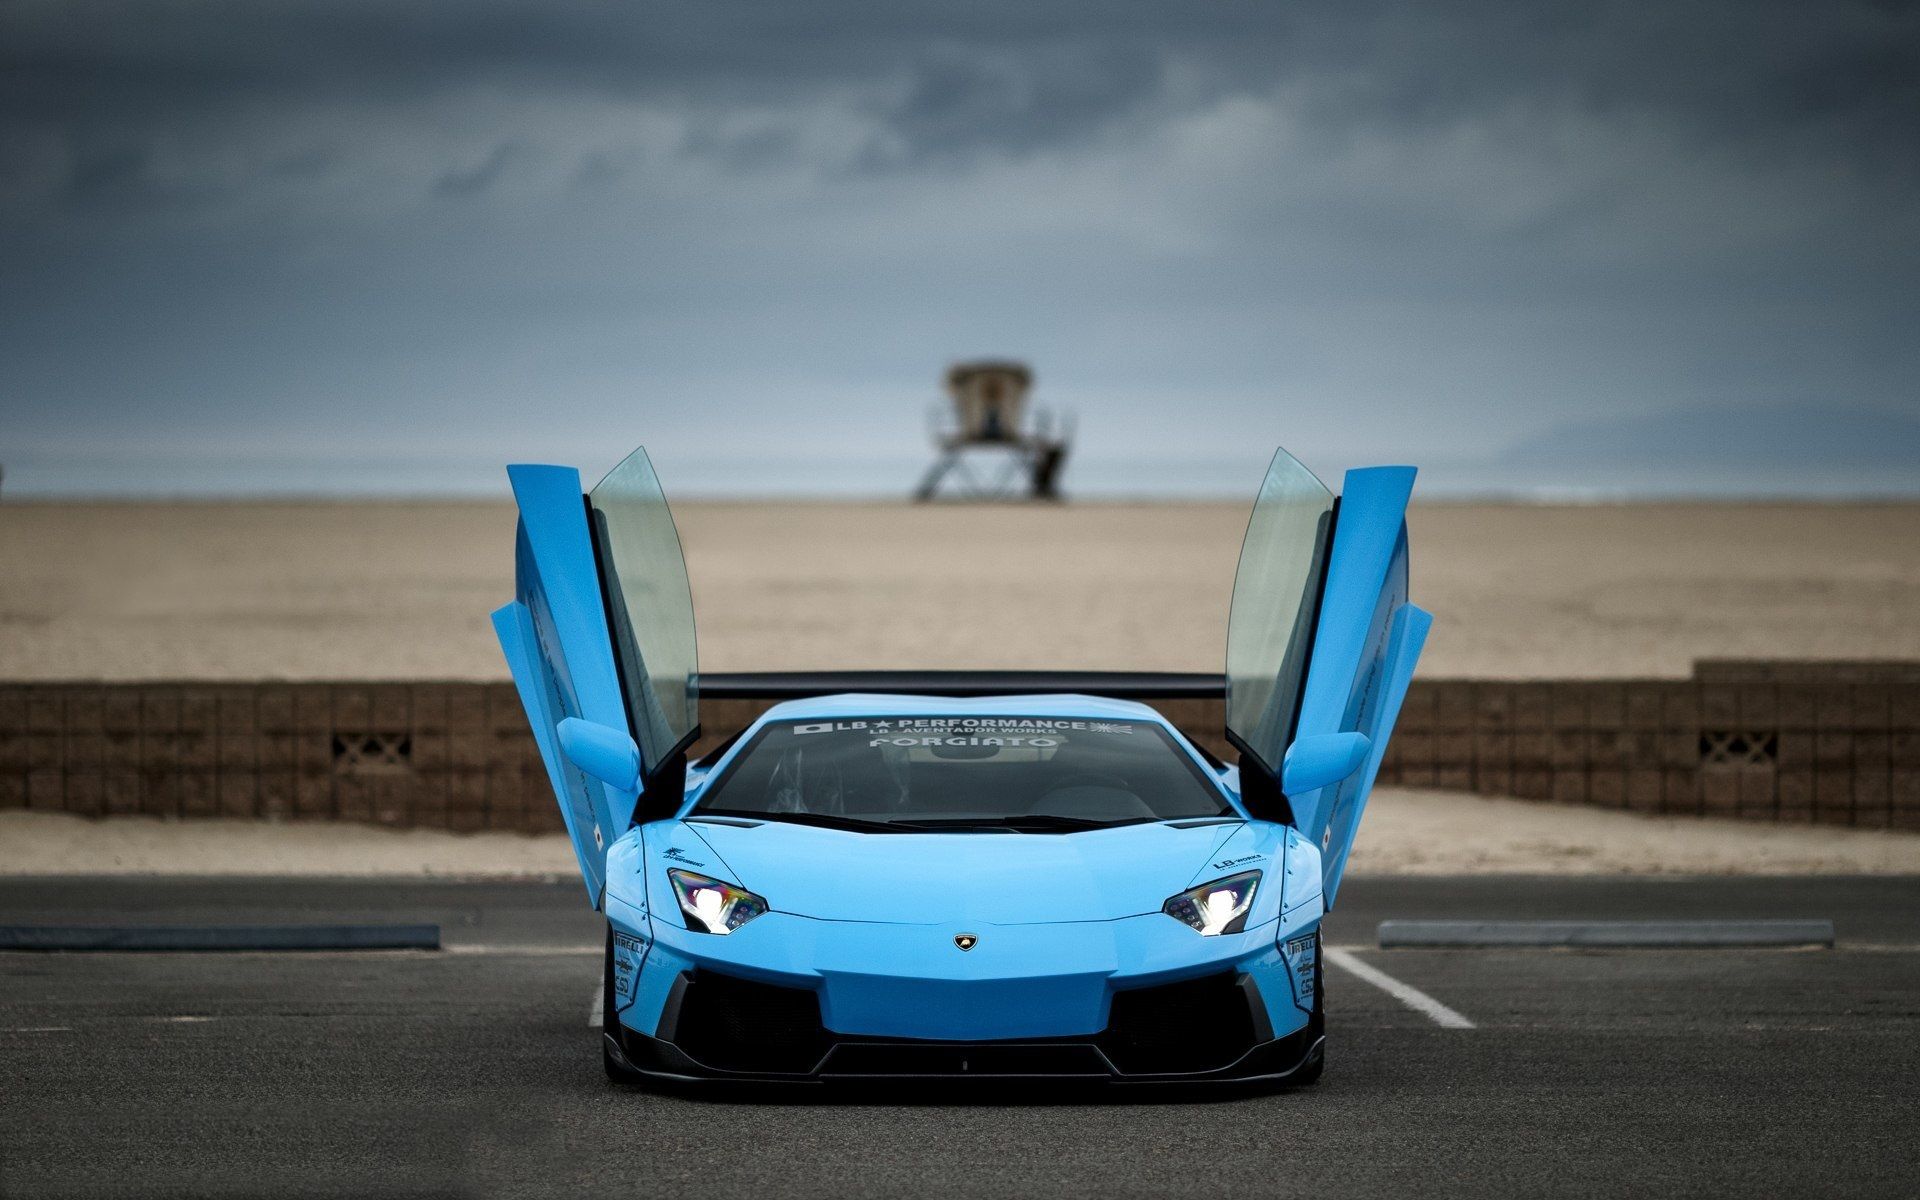 Wallpaper Blue Lamborghini Aventador supercar, doors opened 1920x1200 HD Picture, Image